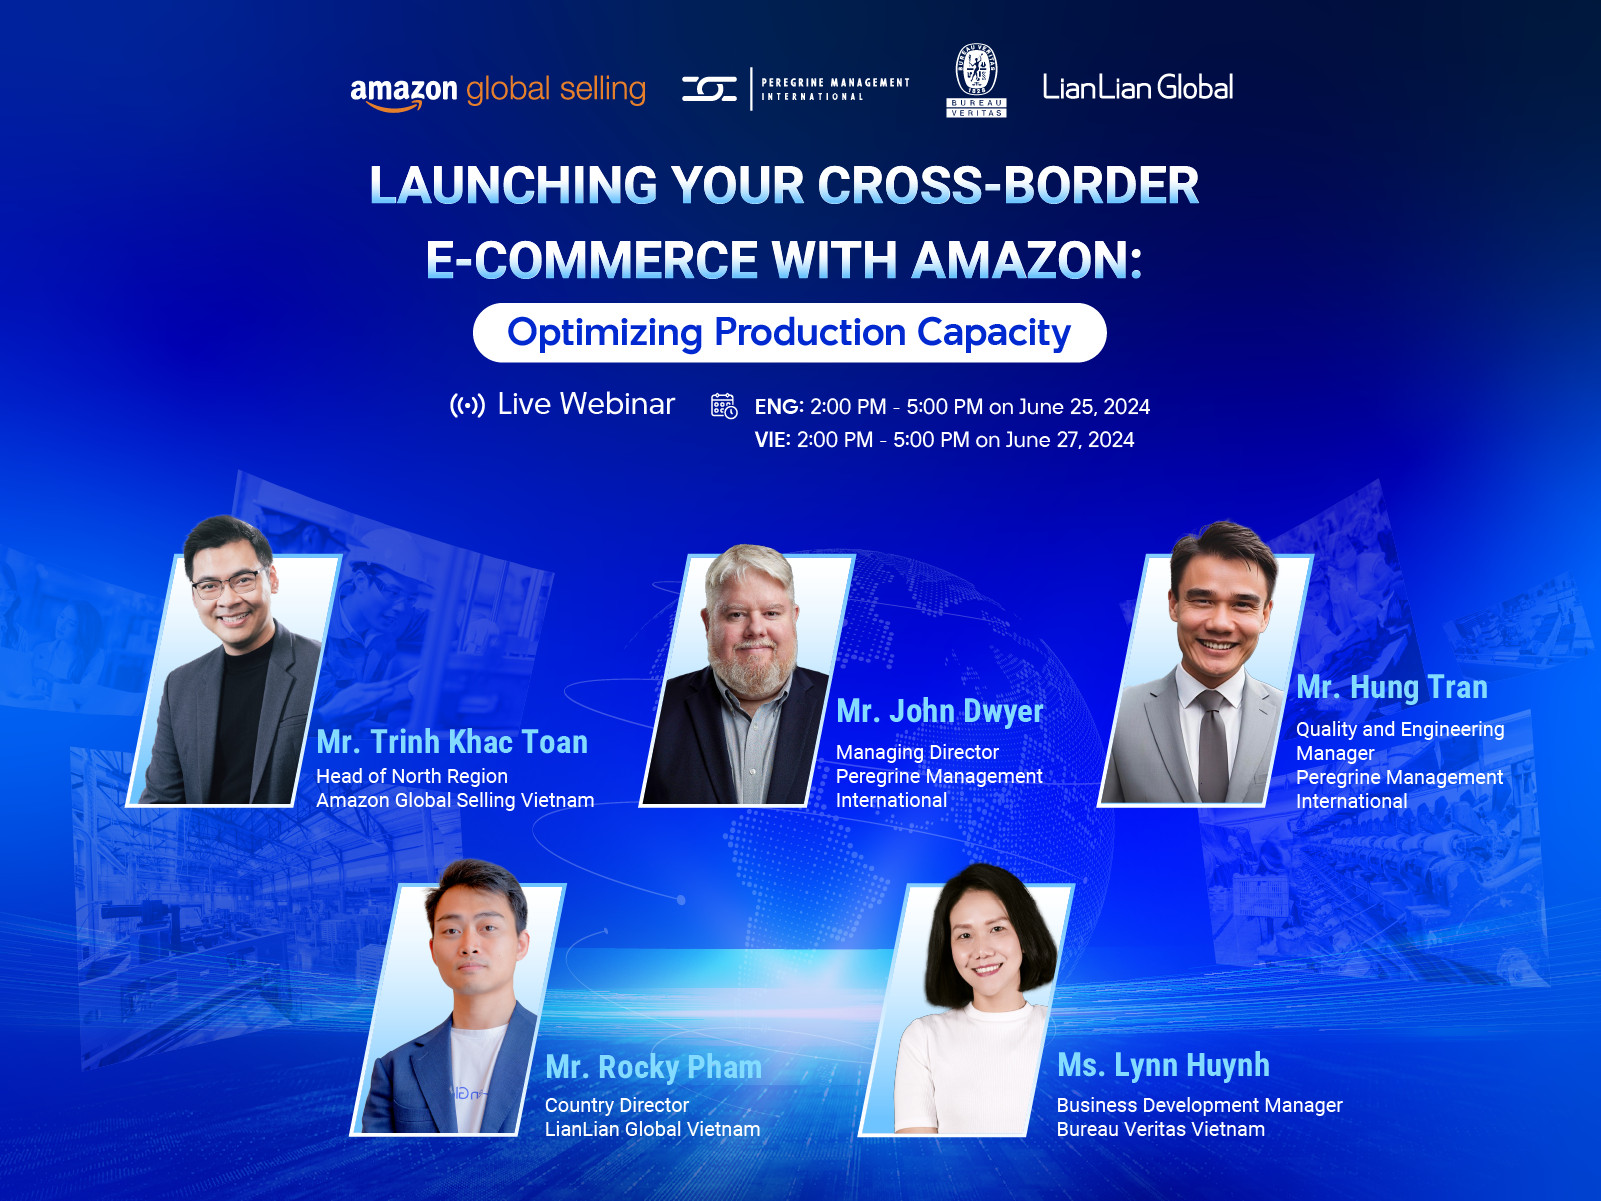 Launching Your Cross-border E-commerce with Amazon: Optimizing Production Capacity with Peregrine Management International